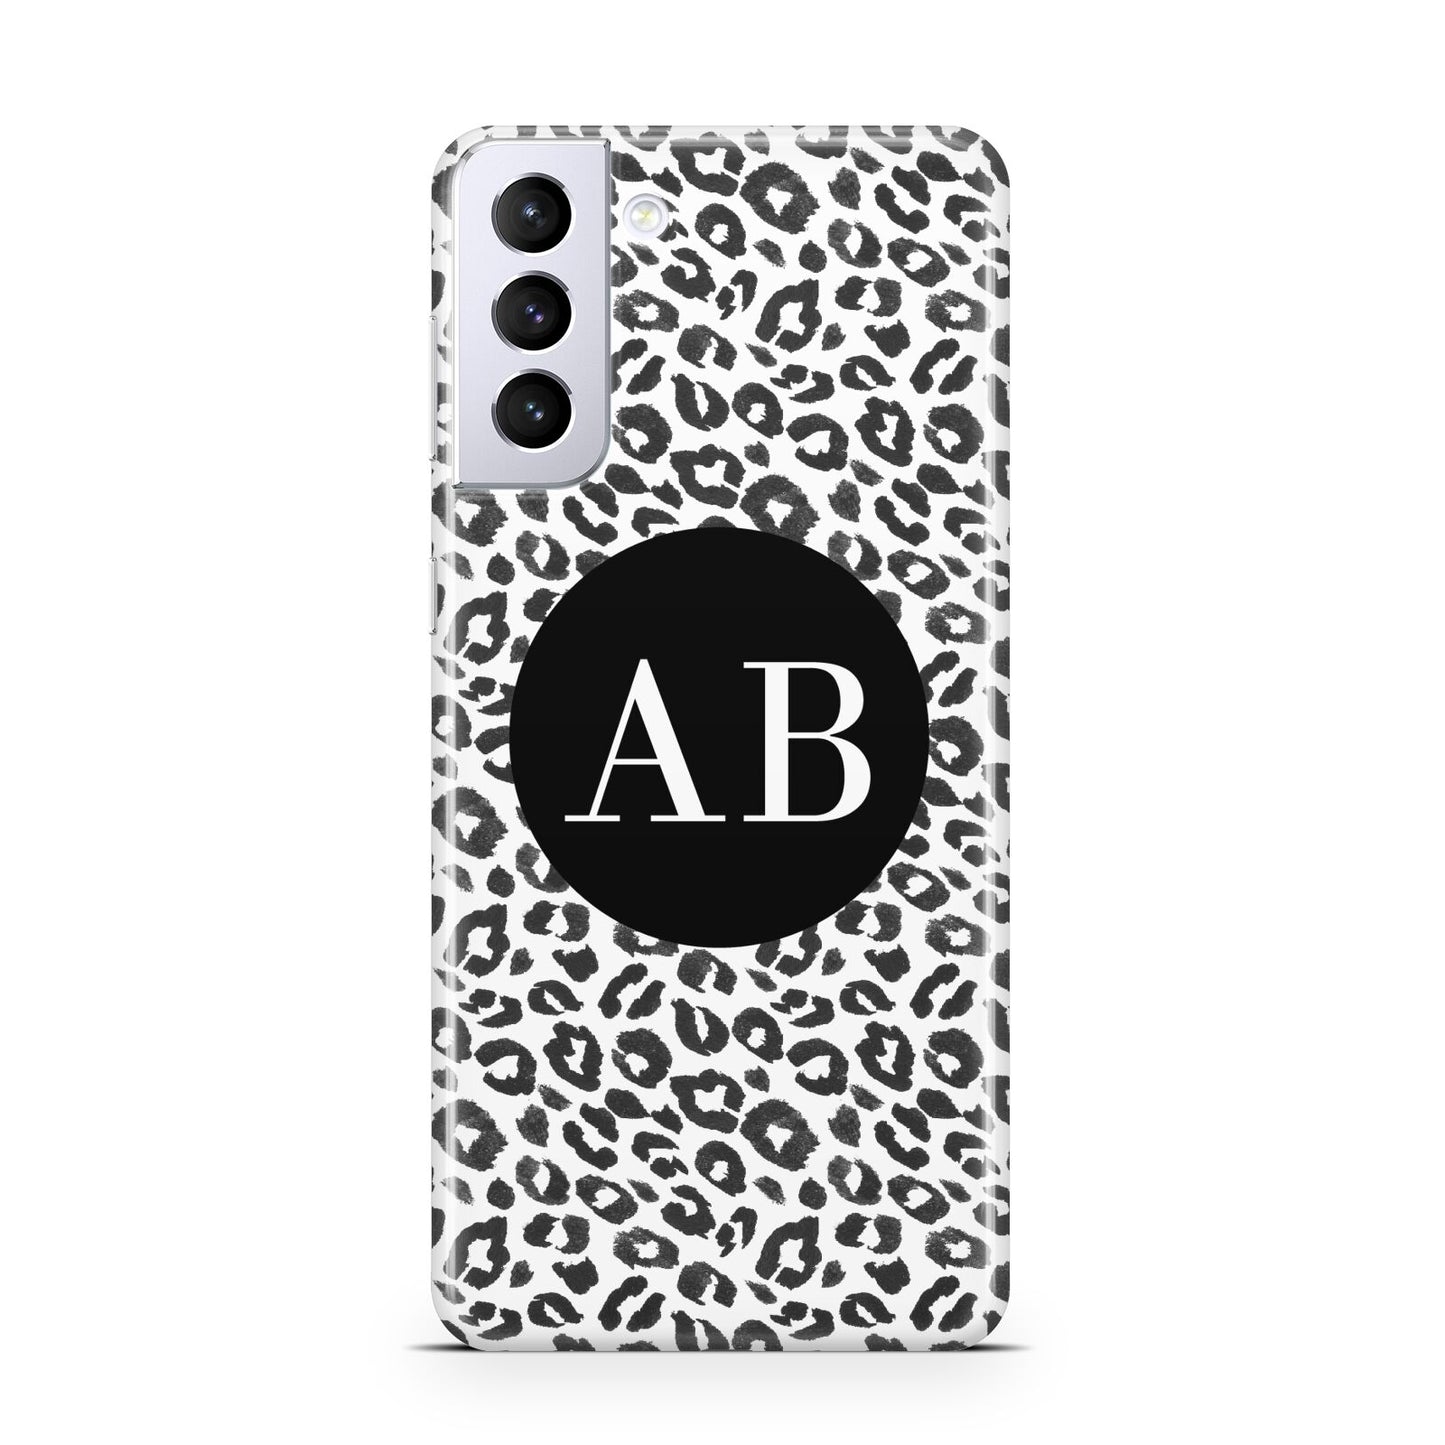 Leopard Print Black and White Samsung S21 Plus Phone Case